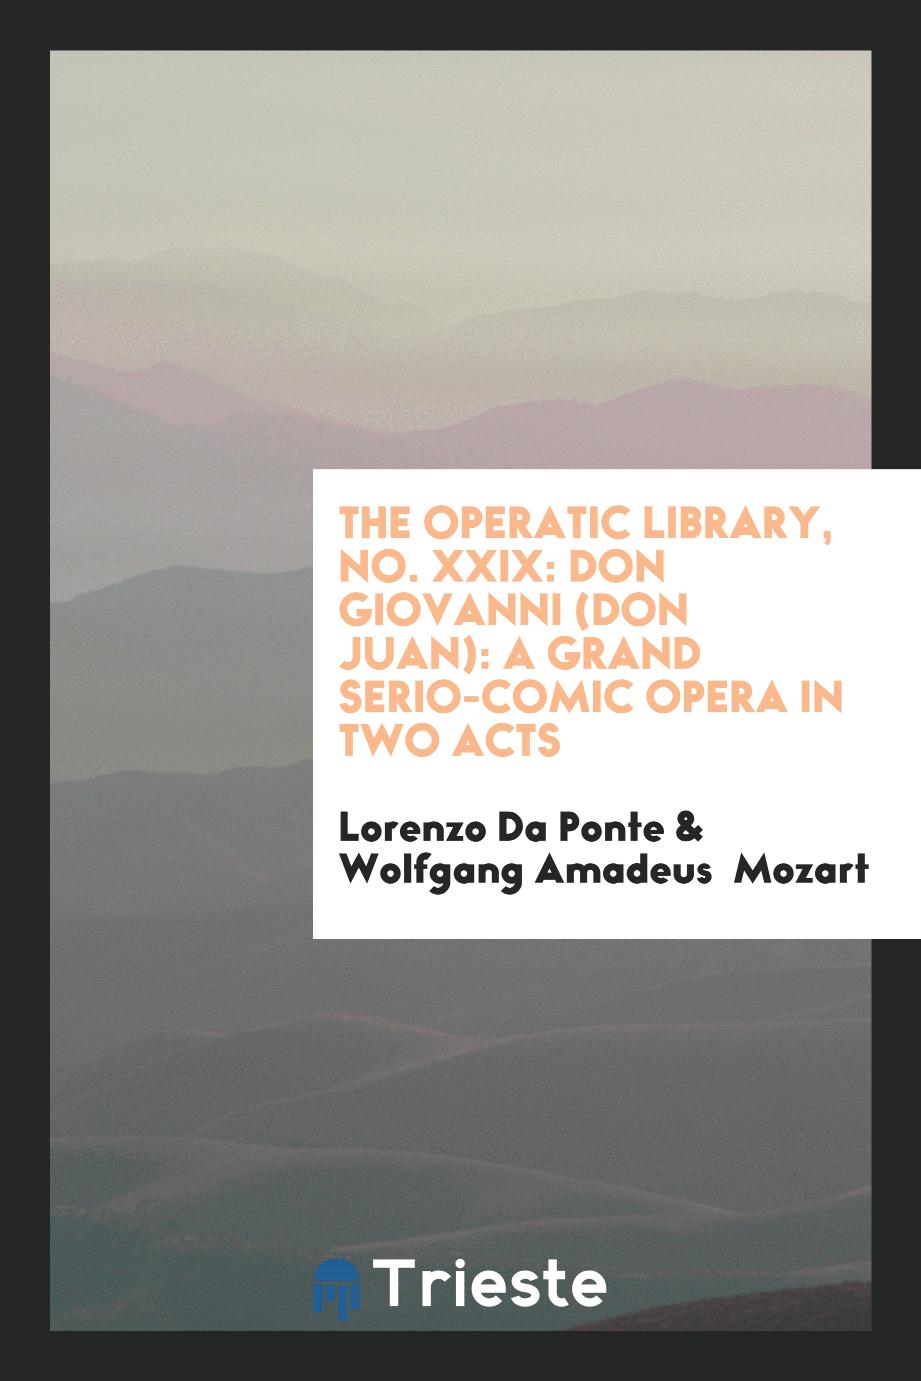 The operatic library, No. XXIX: Don Giovanni (Don Juan): a grand serio-comic opera in two acts